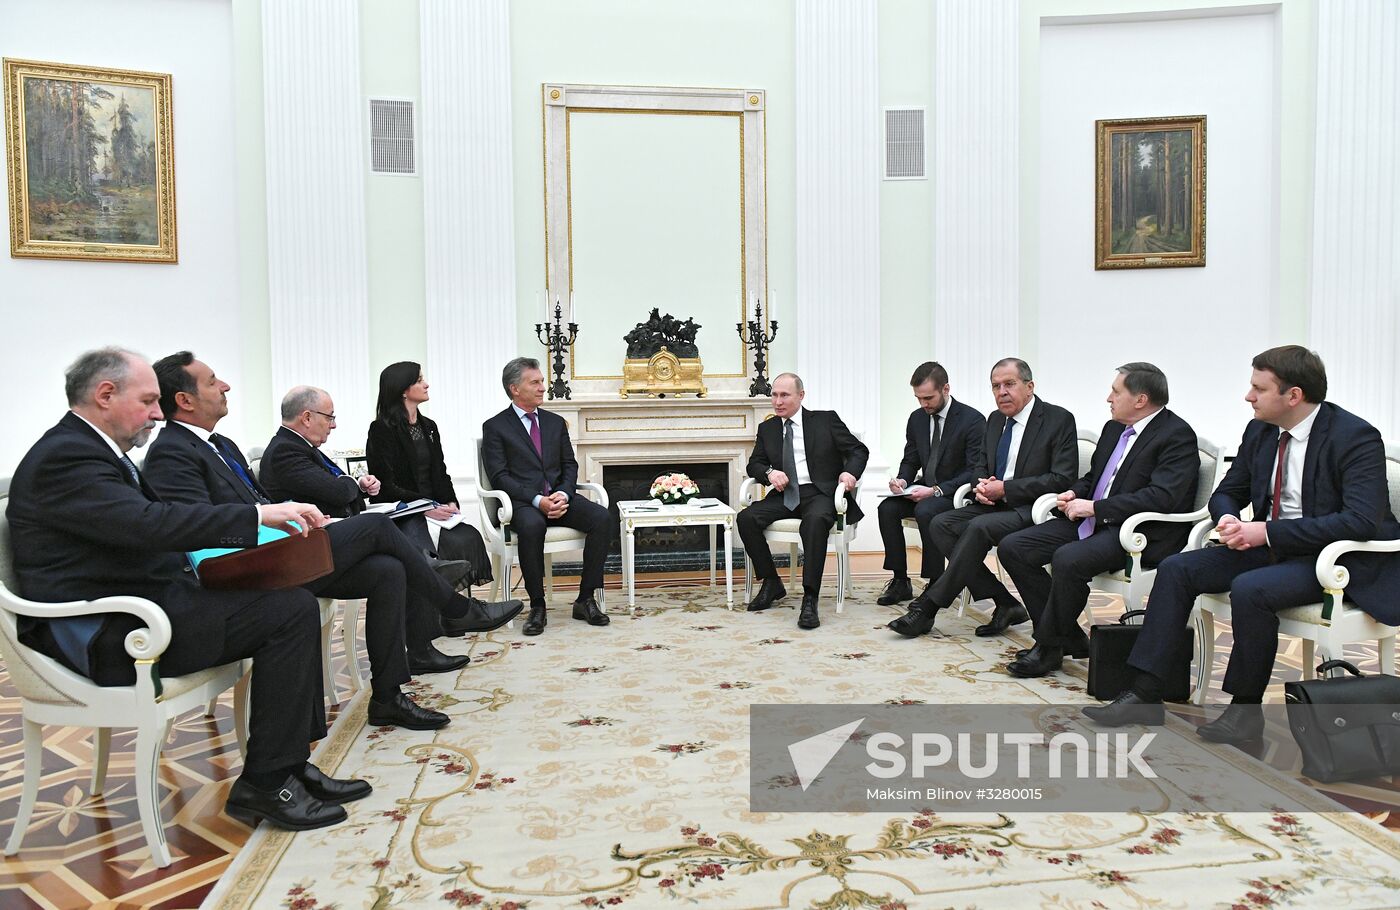 President Vladimir Putin meets with Argentinian President Mauricio Macri